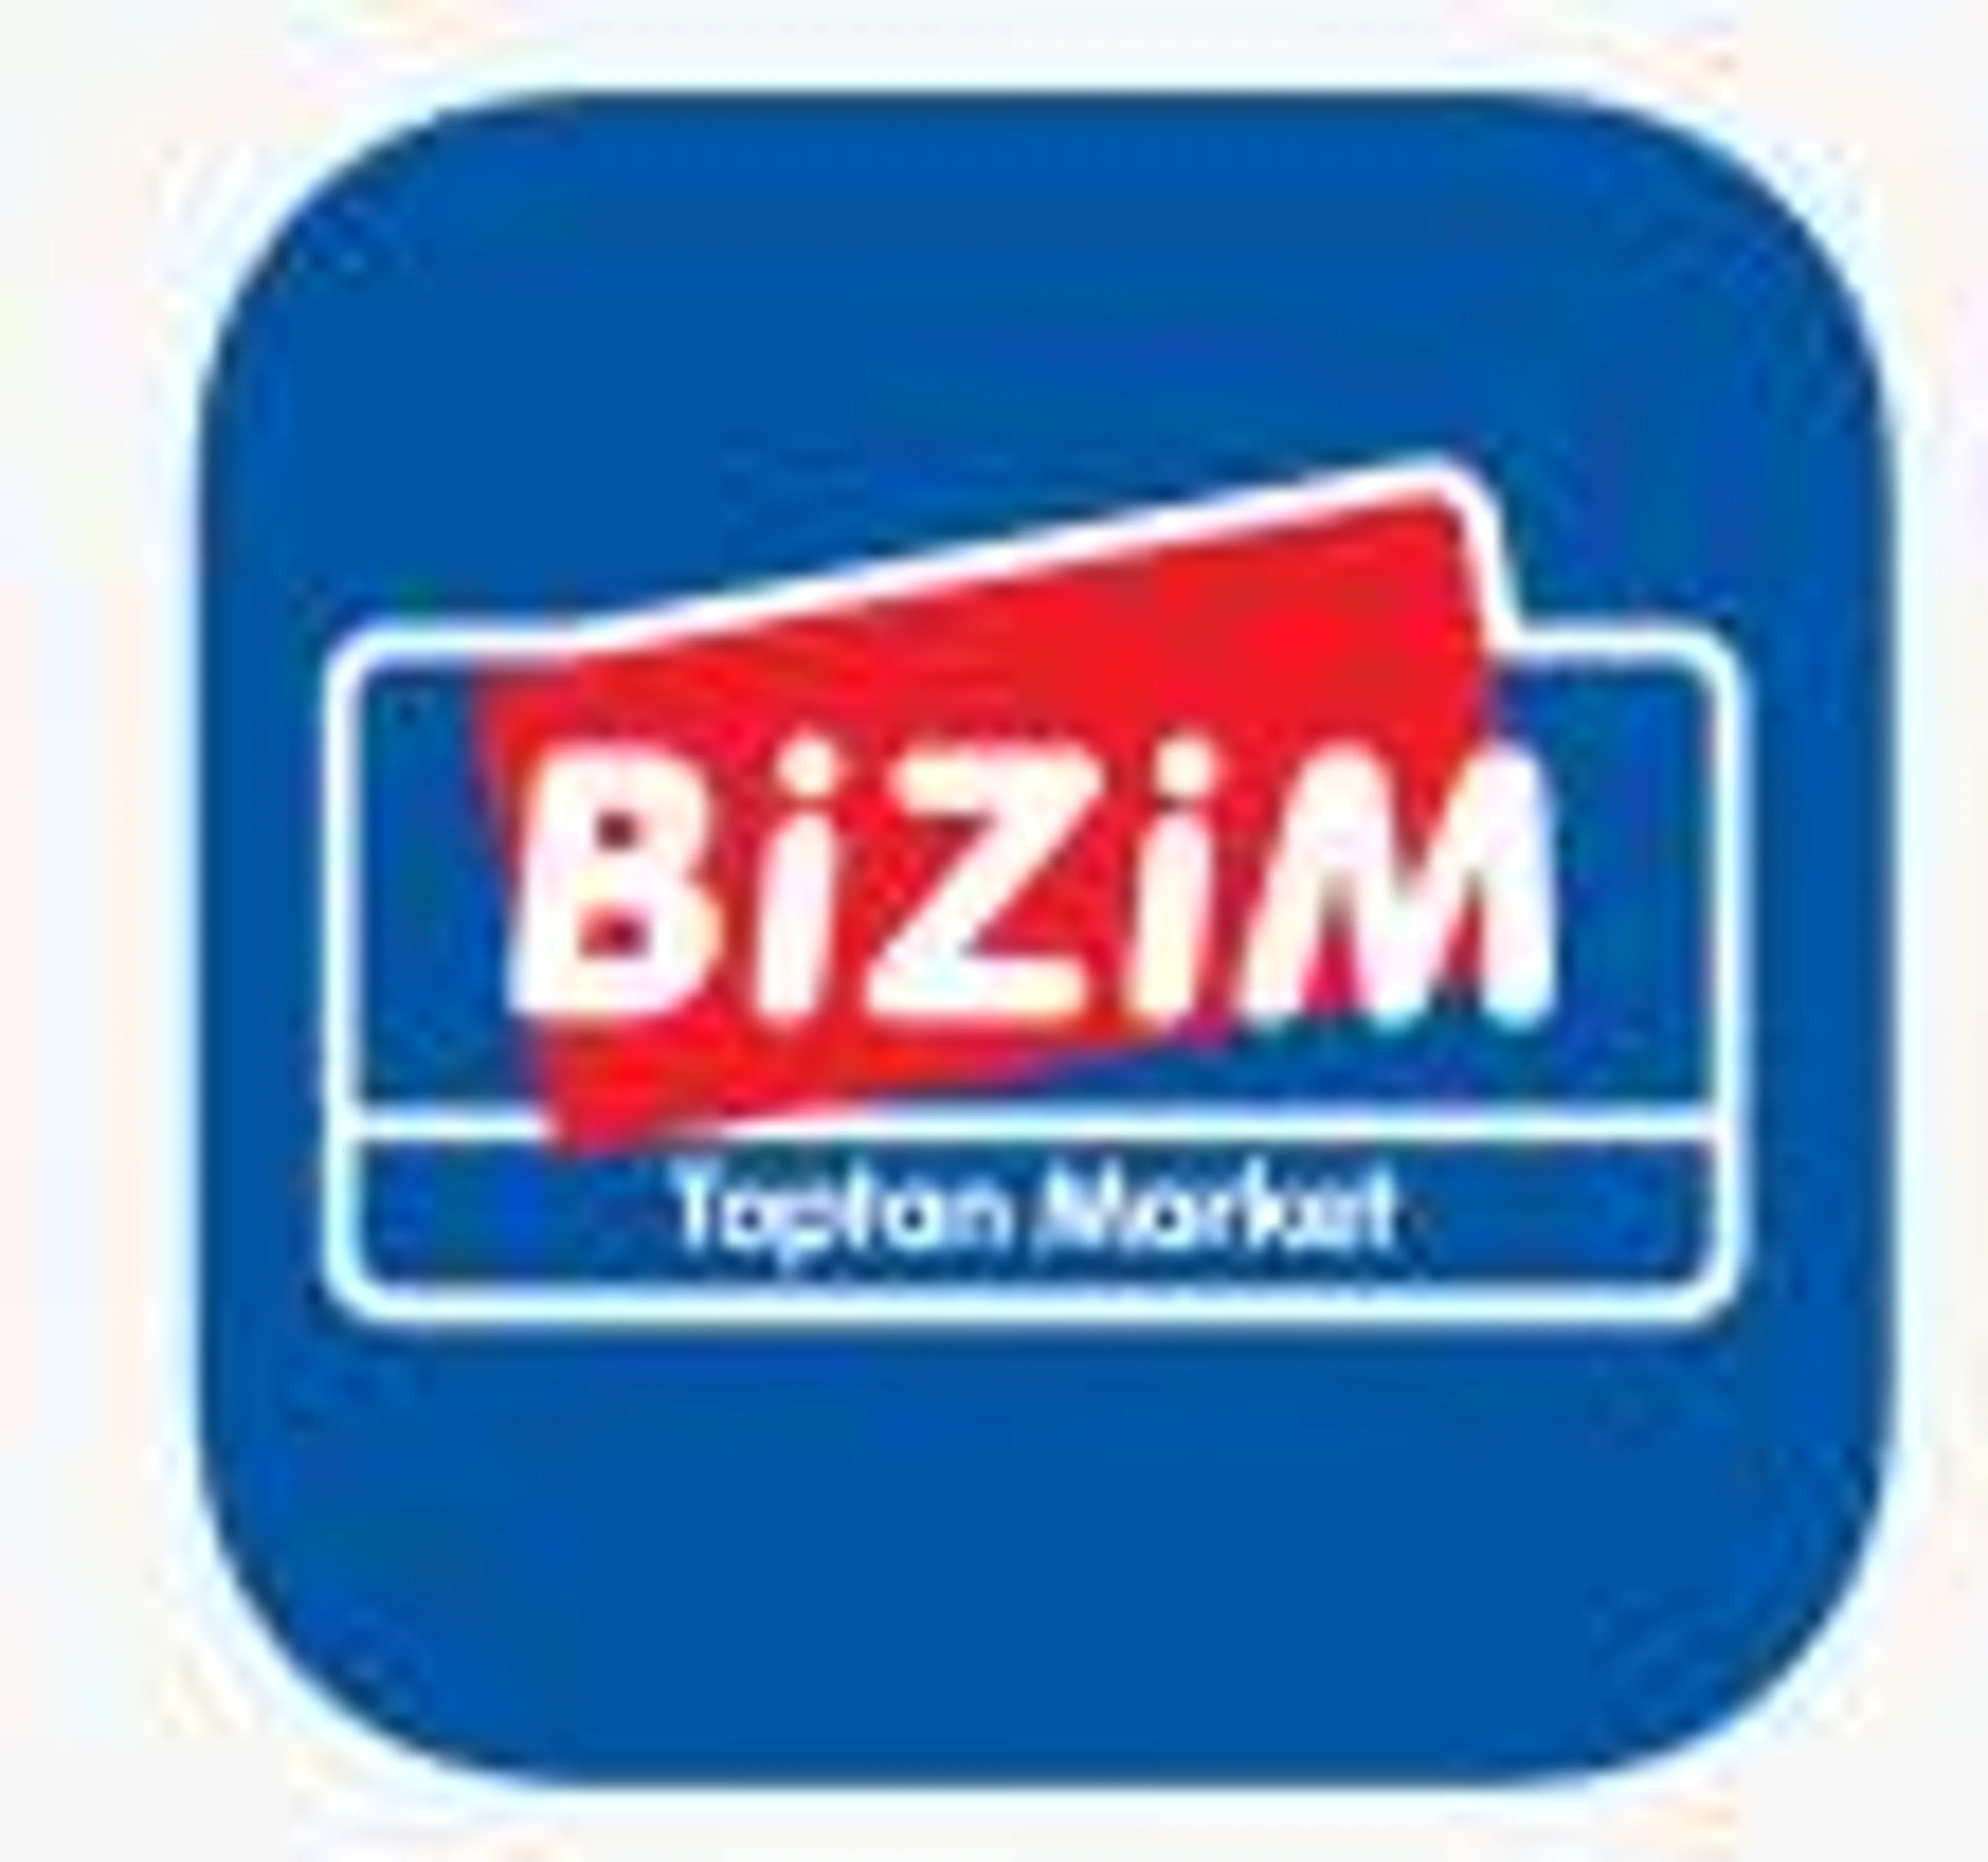 BIZIM TOPTAN MARKET logo